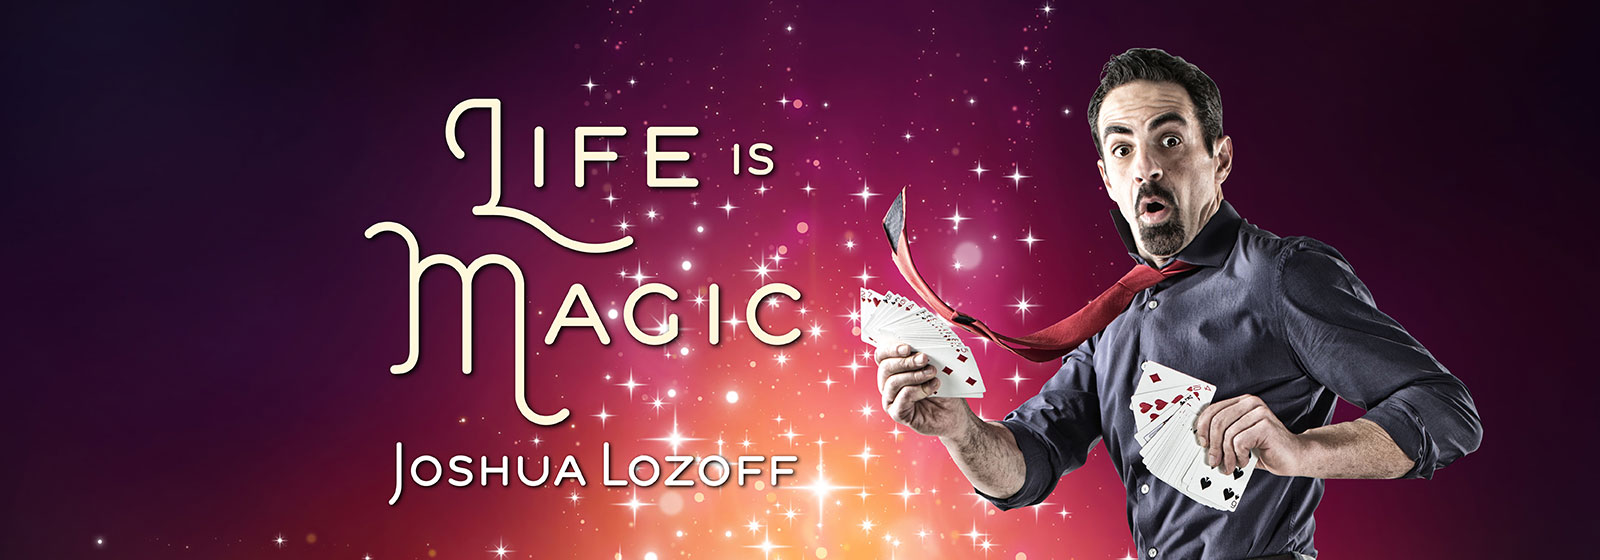 Joshua Lozoff - Life is Magic!